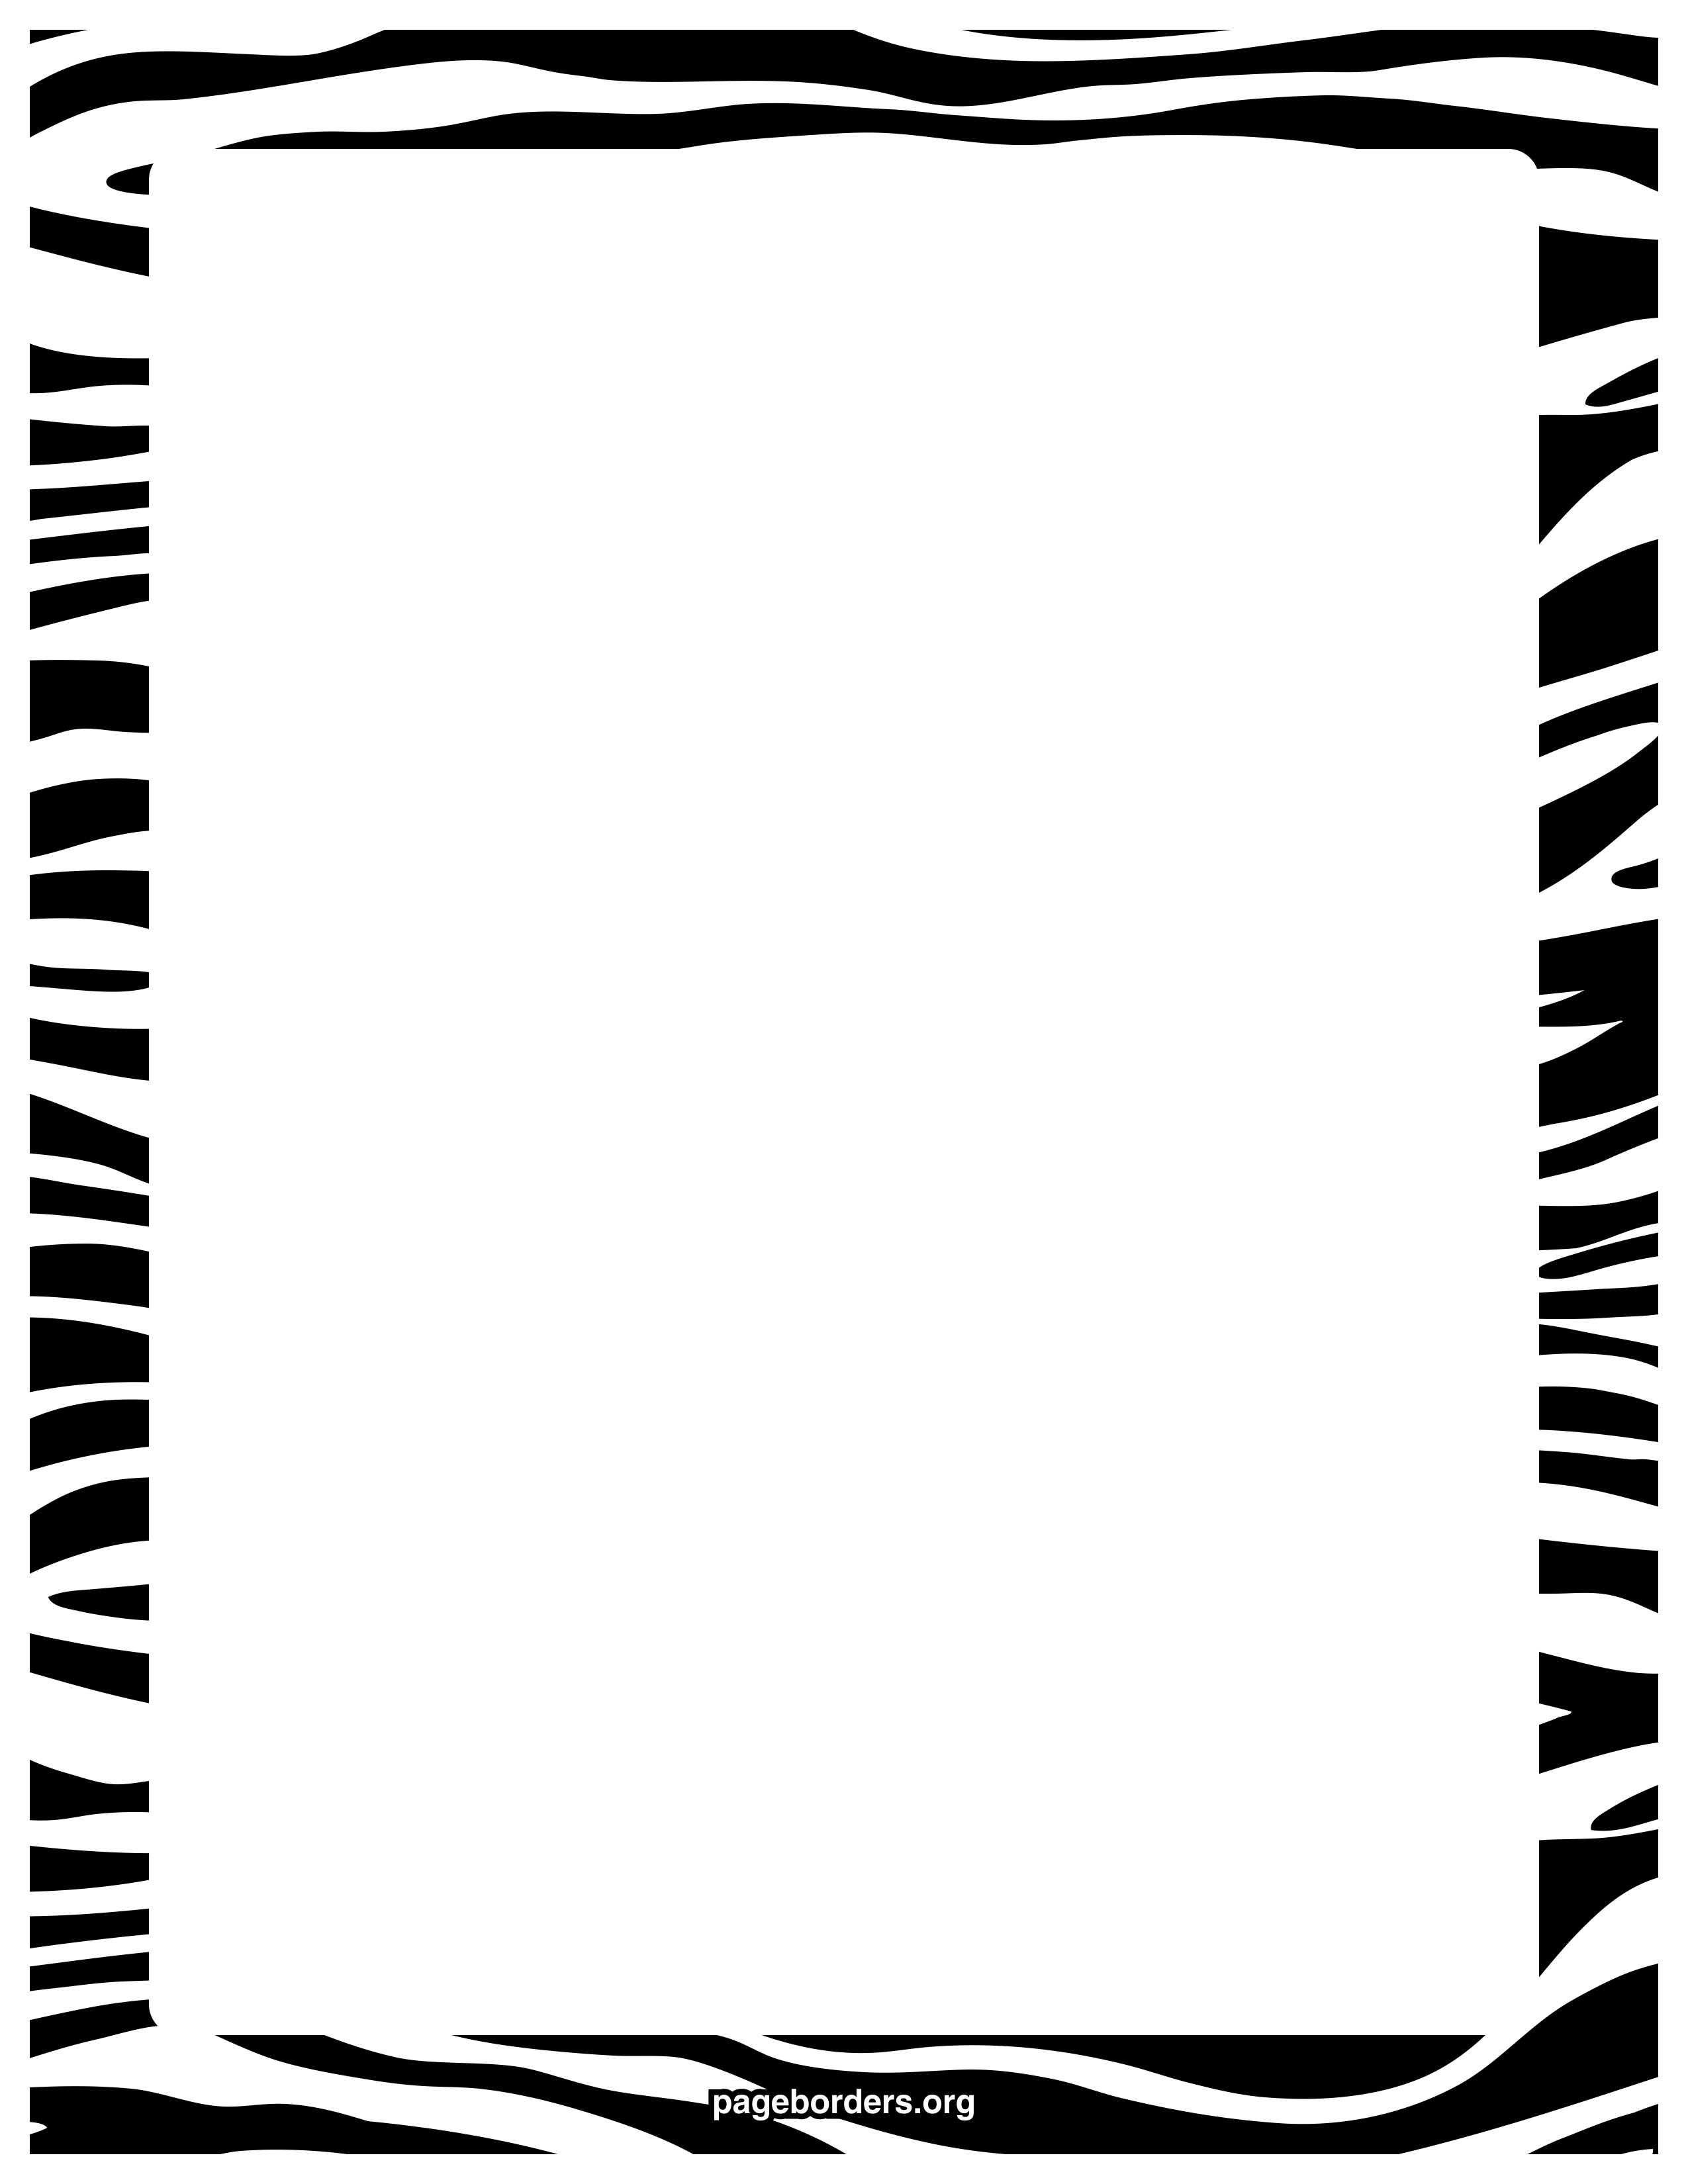 Zebra Print Border: Clip Art, Page Border, and Vector Graphics